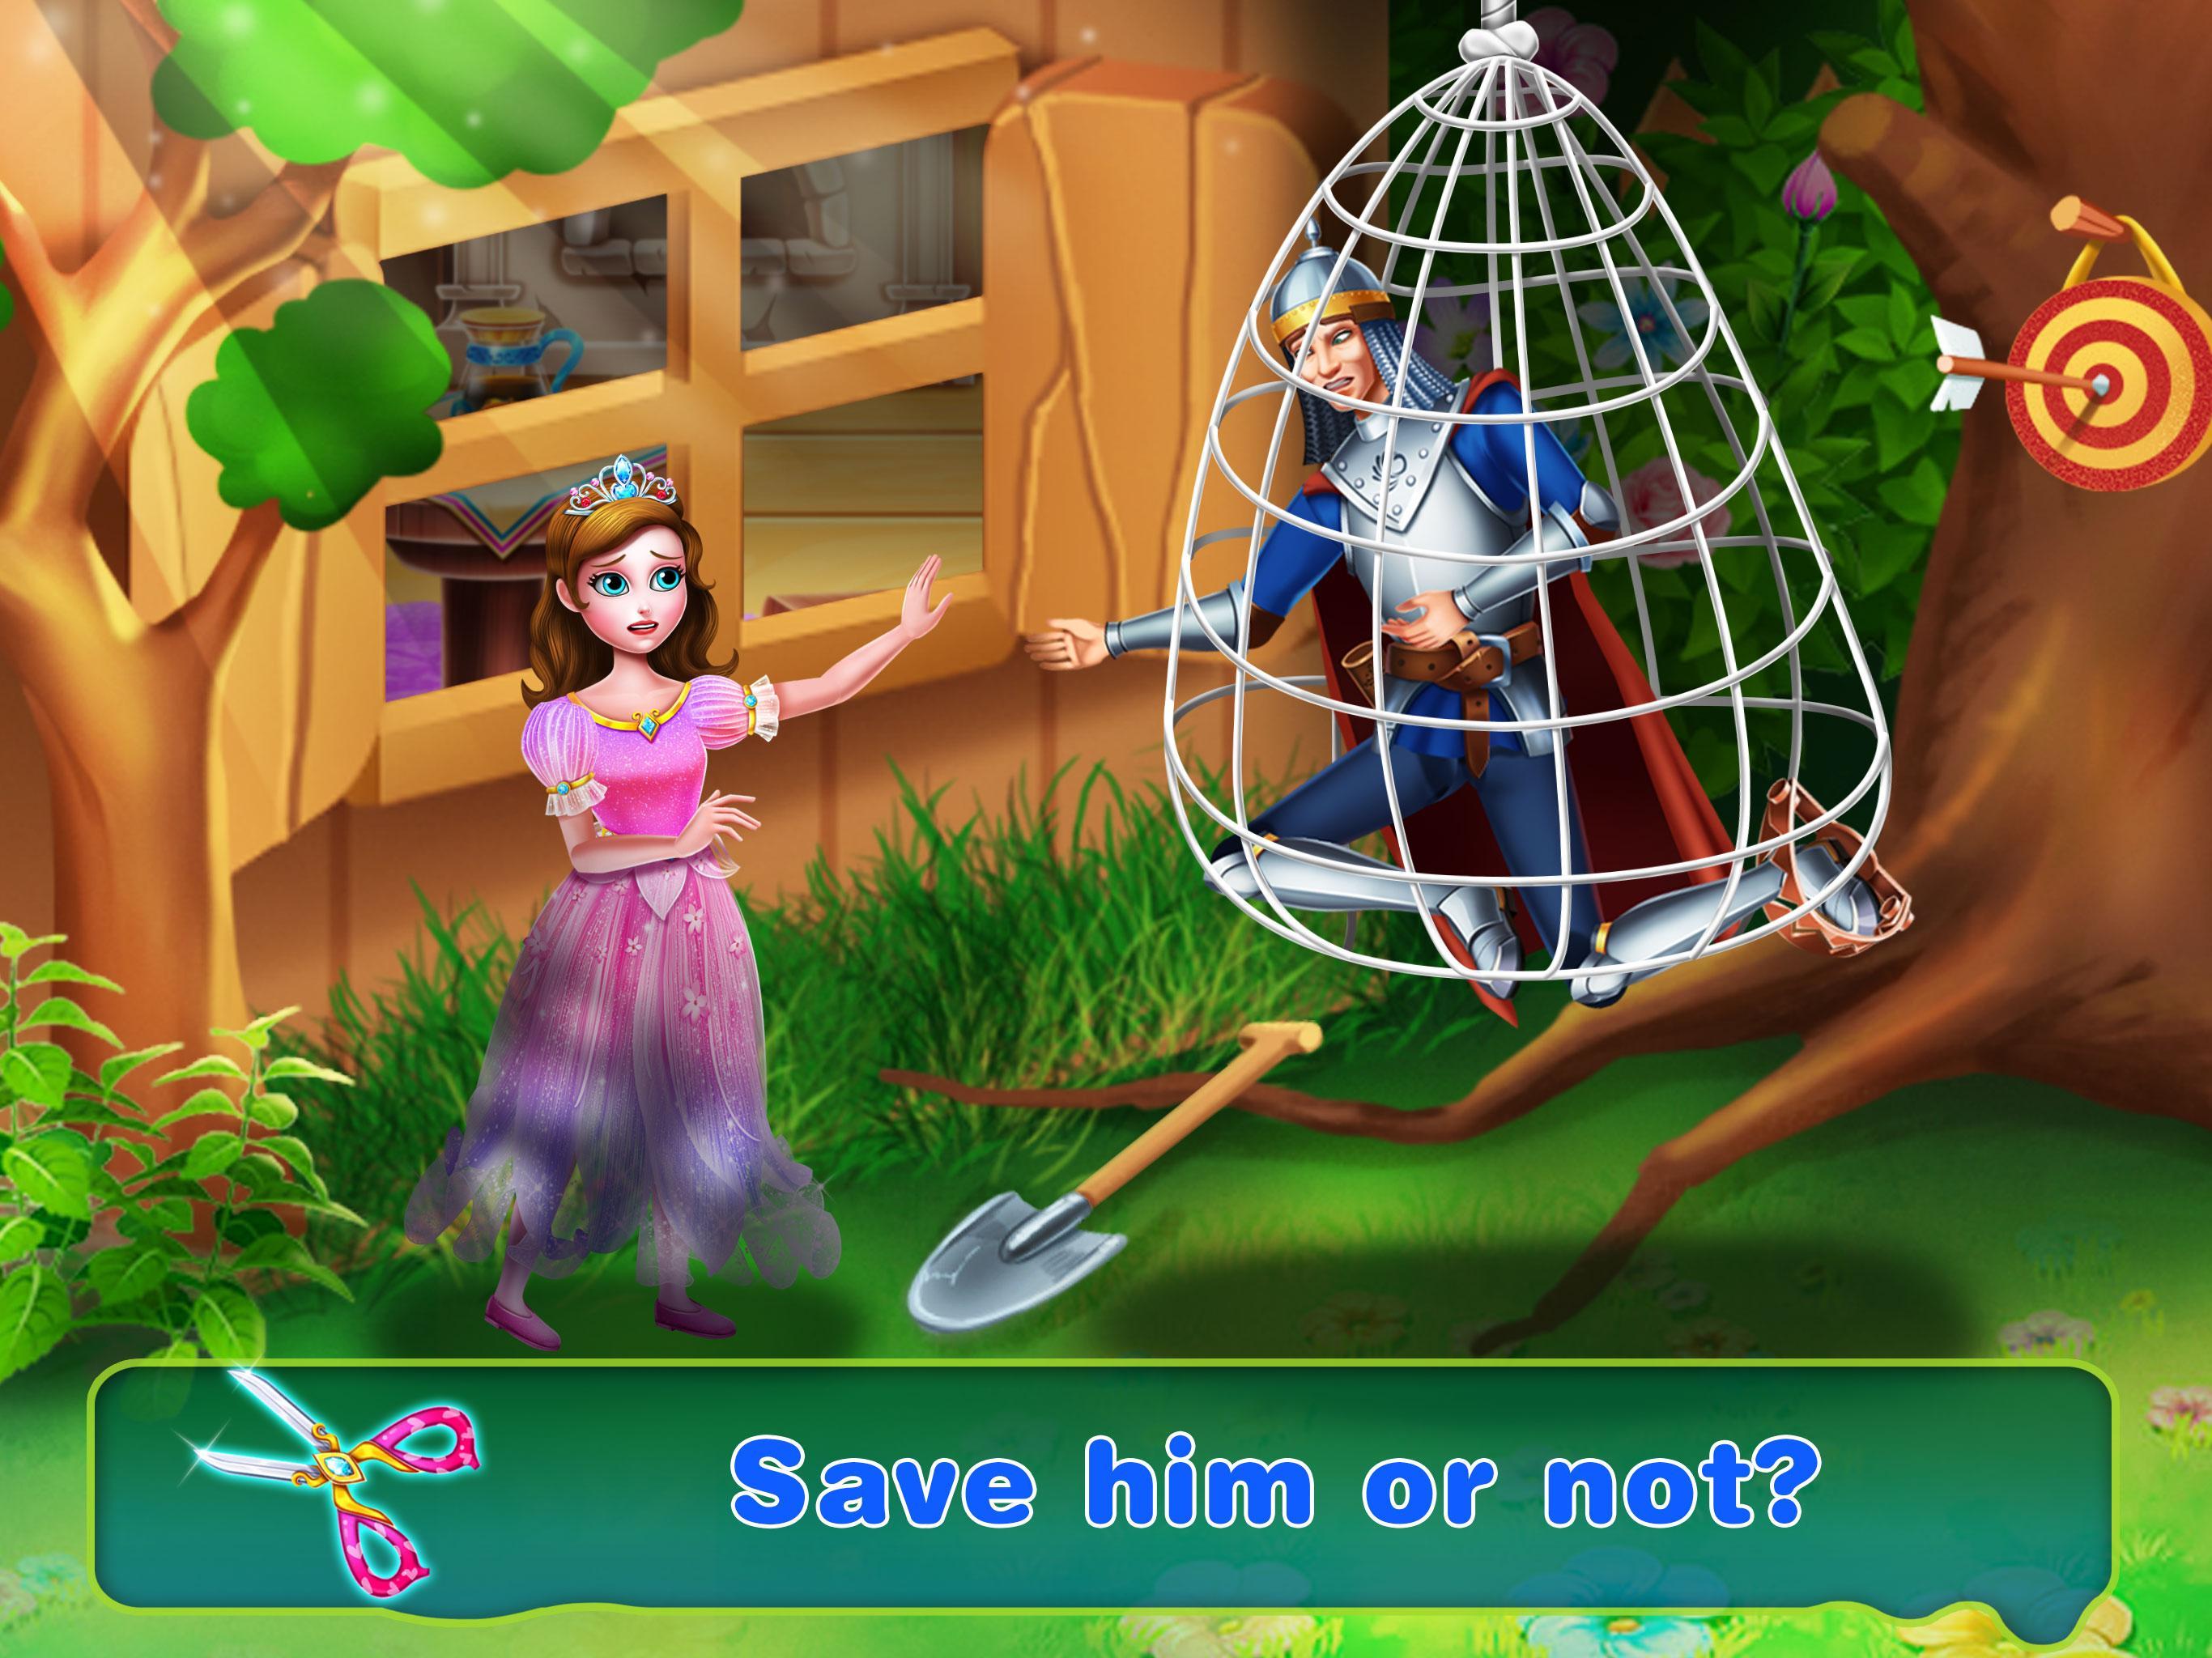 Игра спасти леди. Игра спасти принцессу. Программа спасения принцесс. Дидактическая игра «спасение принцессы». Принц спасает девушку игра на андроид.